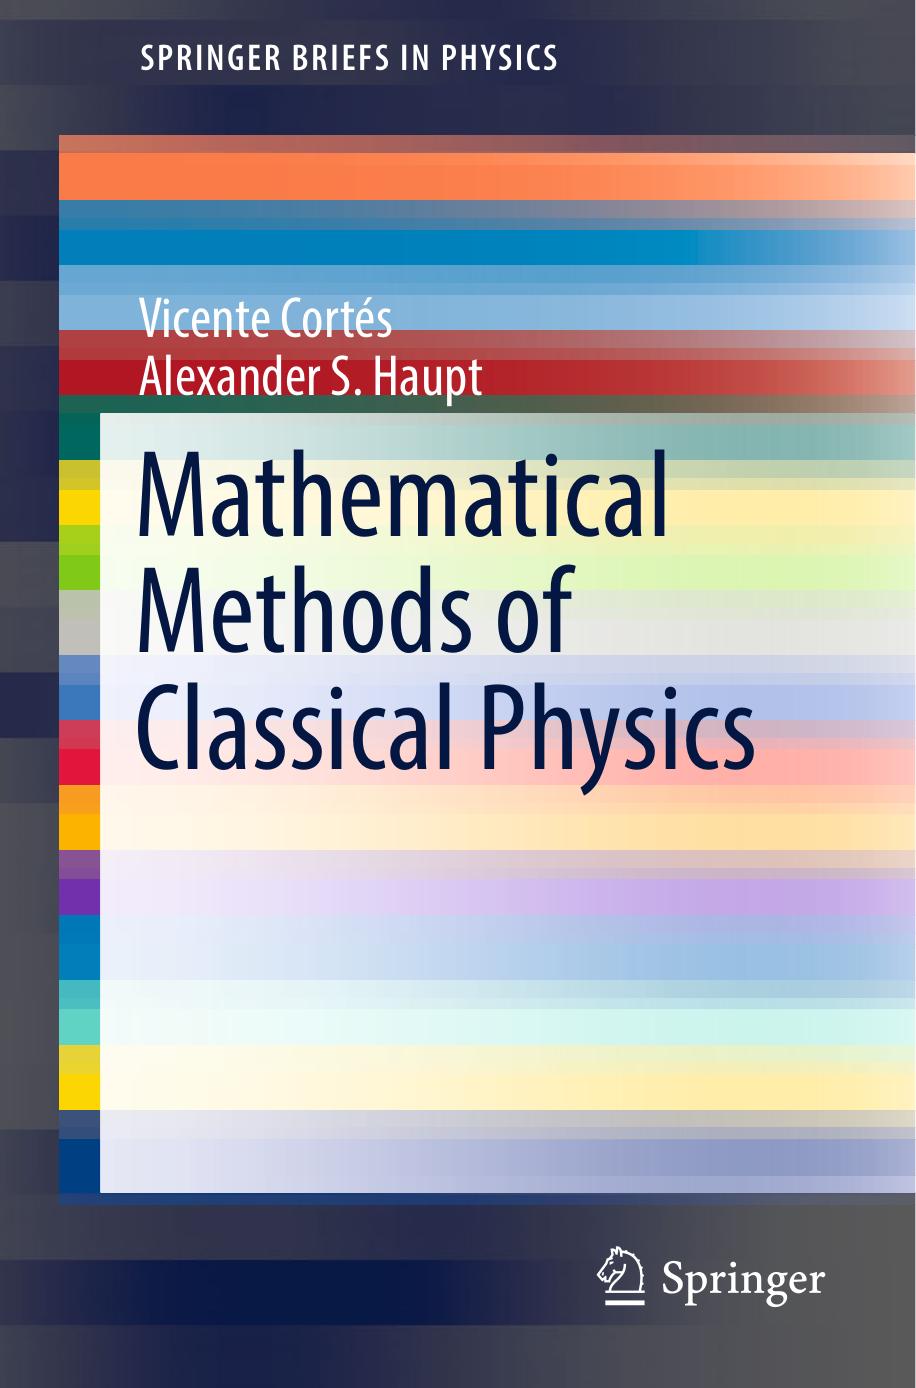 Mathematical Methods of Classical Physics ( PDFDrive.com ) ( 2017